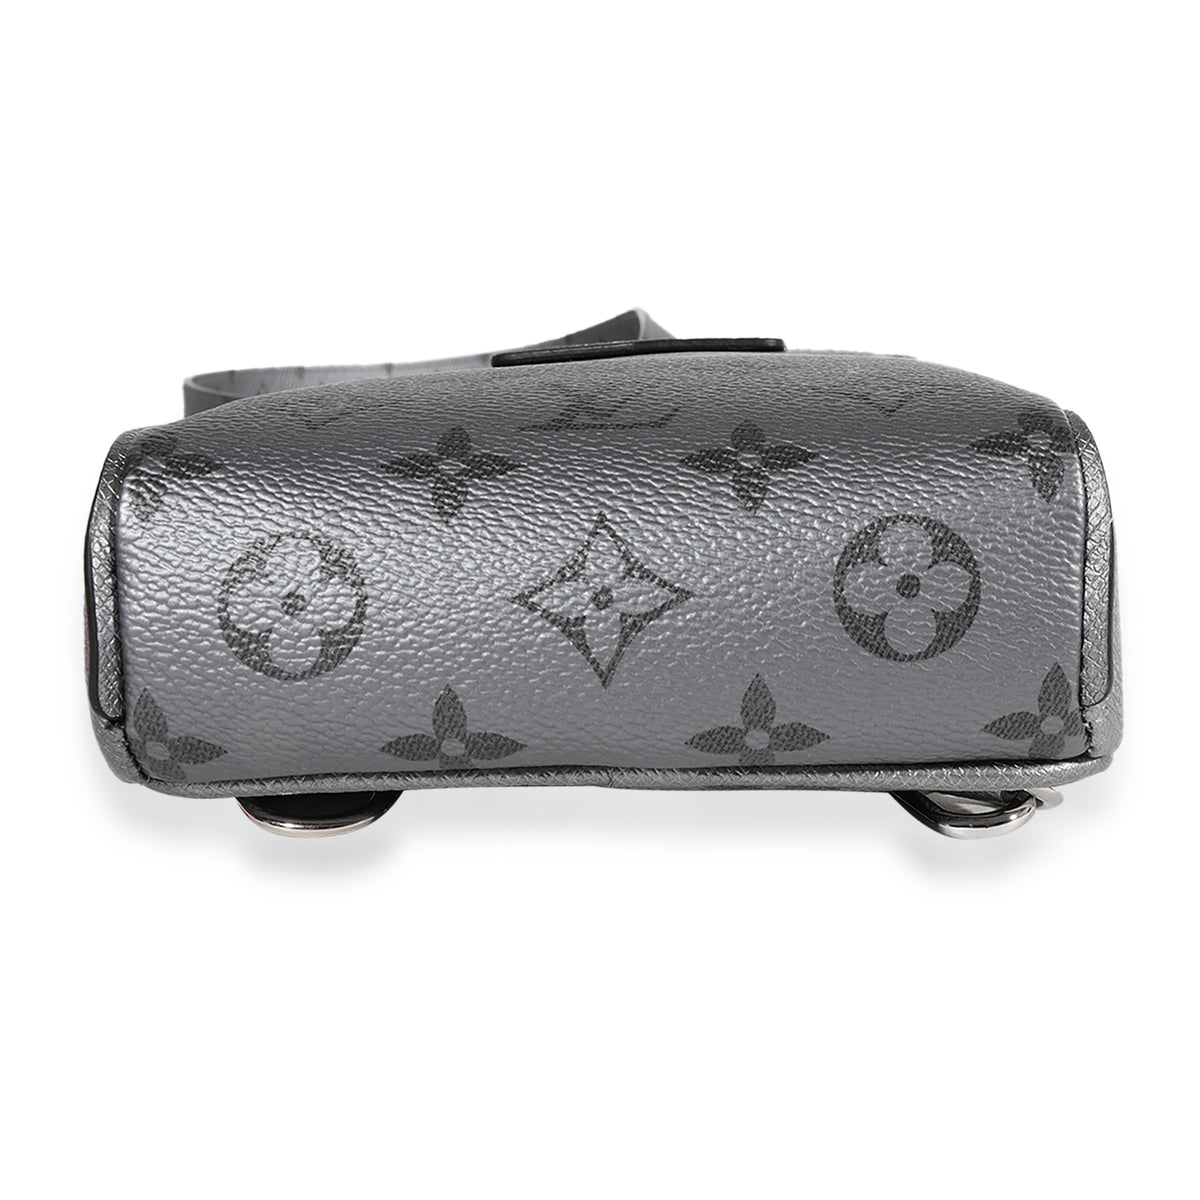 Authentic LOUIS VUITTON Taiga rama Outdoor Sling Bag M30833 Shoulder bag  #26